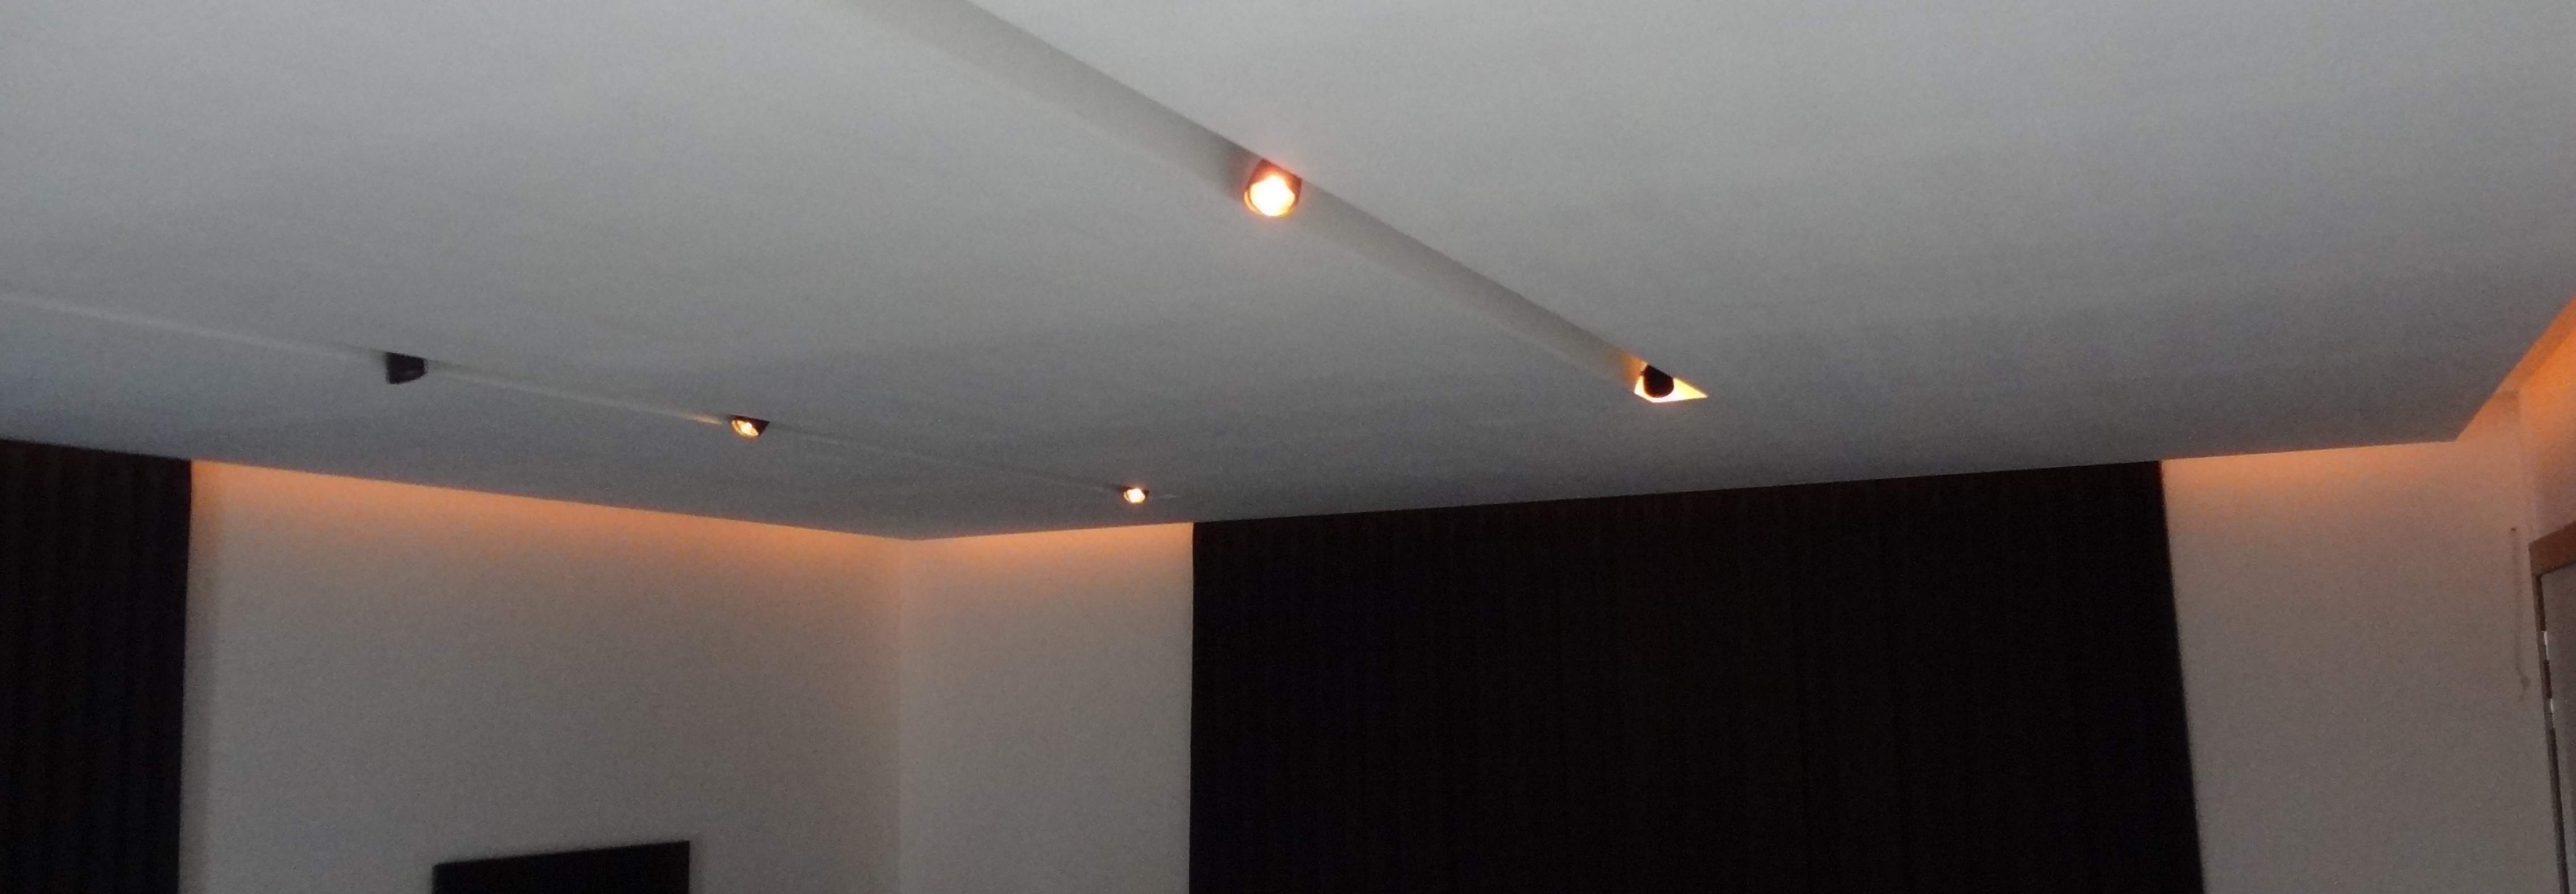 Indirect licht plafond uit gipsplaat